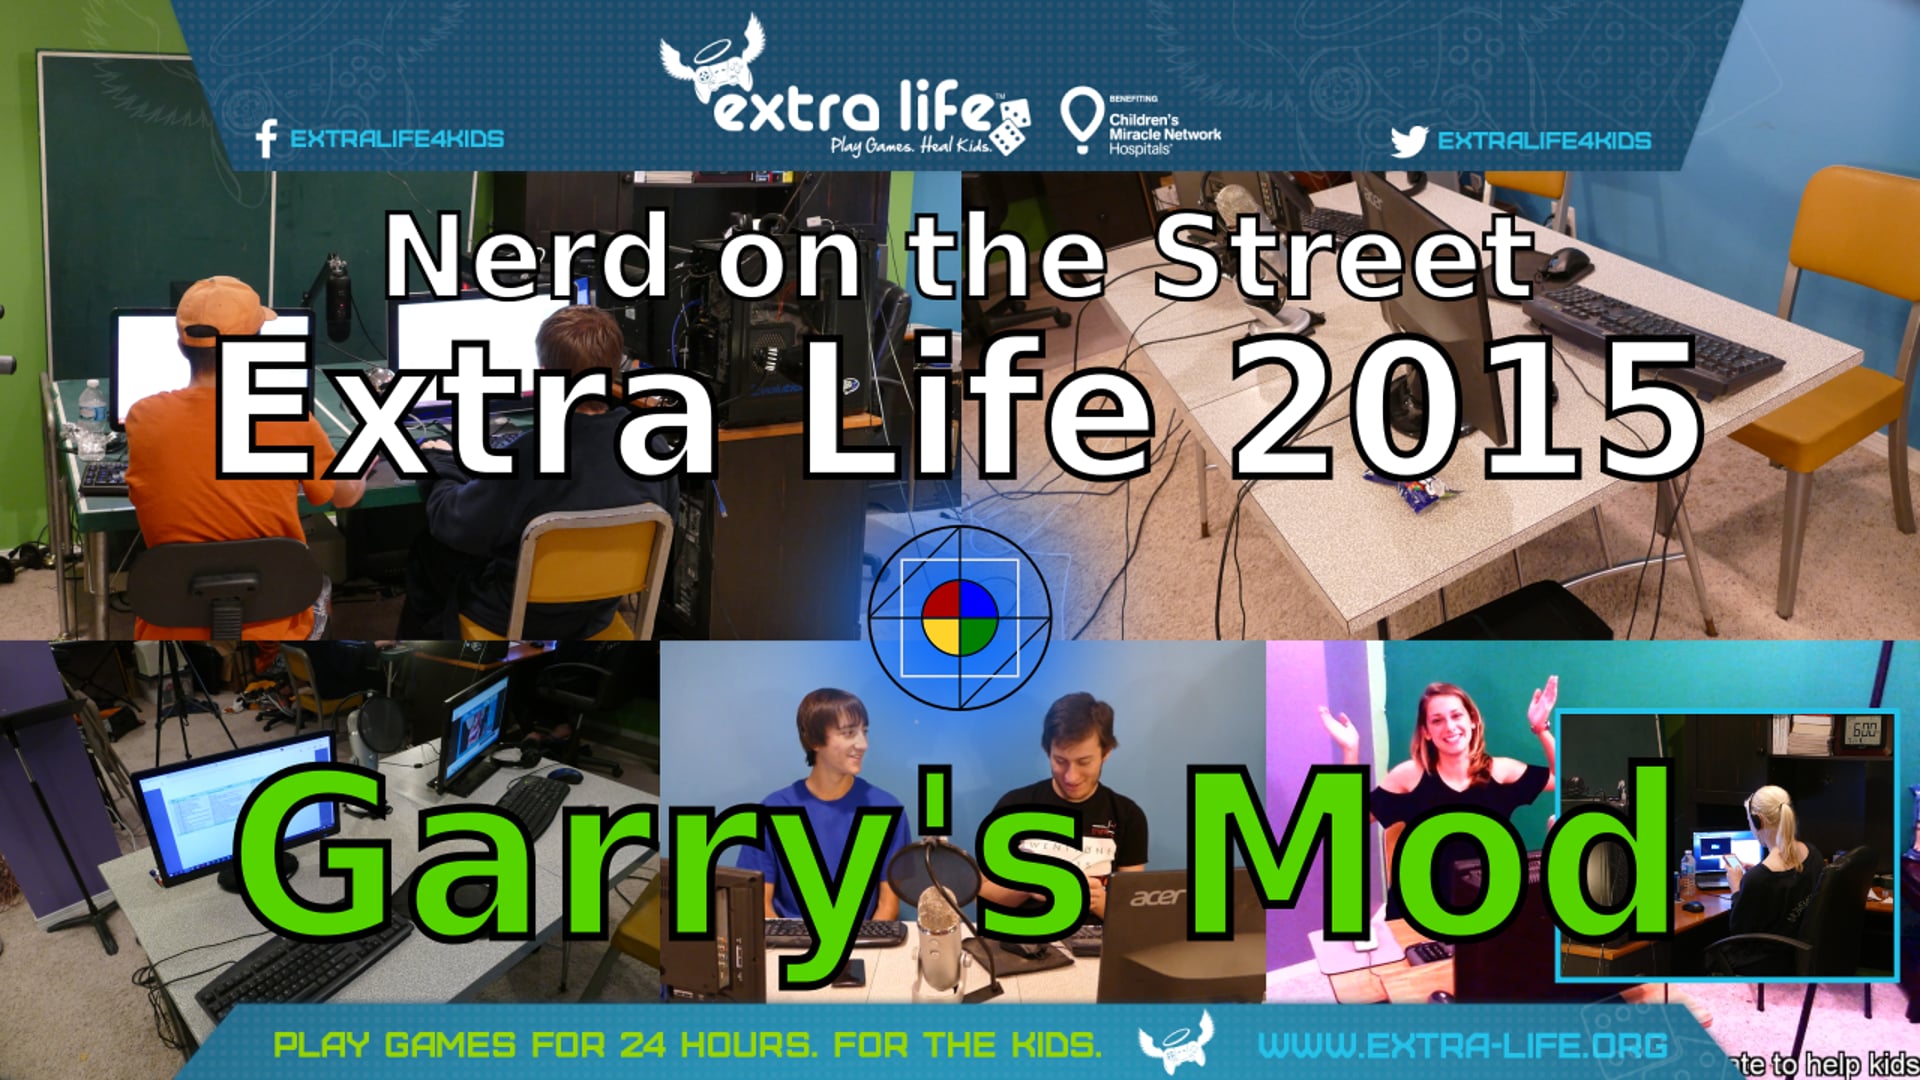 Garry's Mod - Extra Life 2015